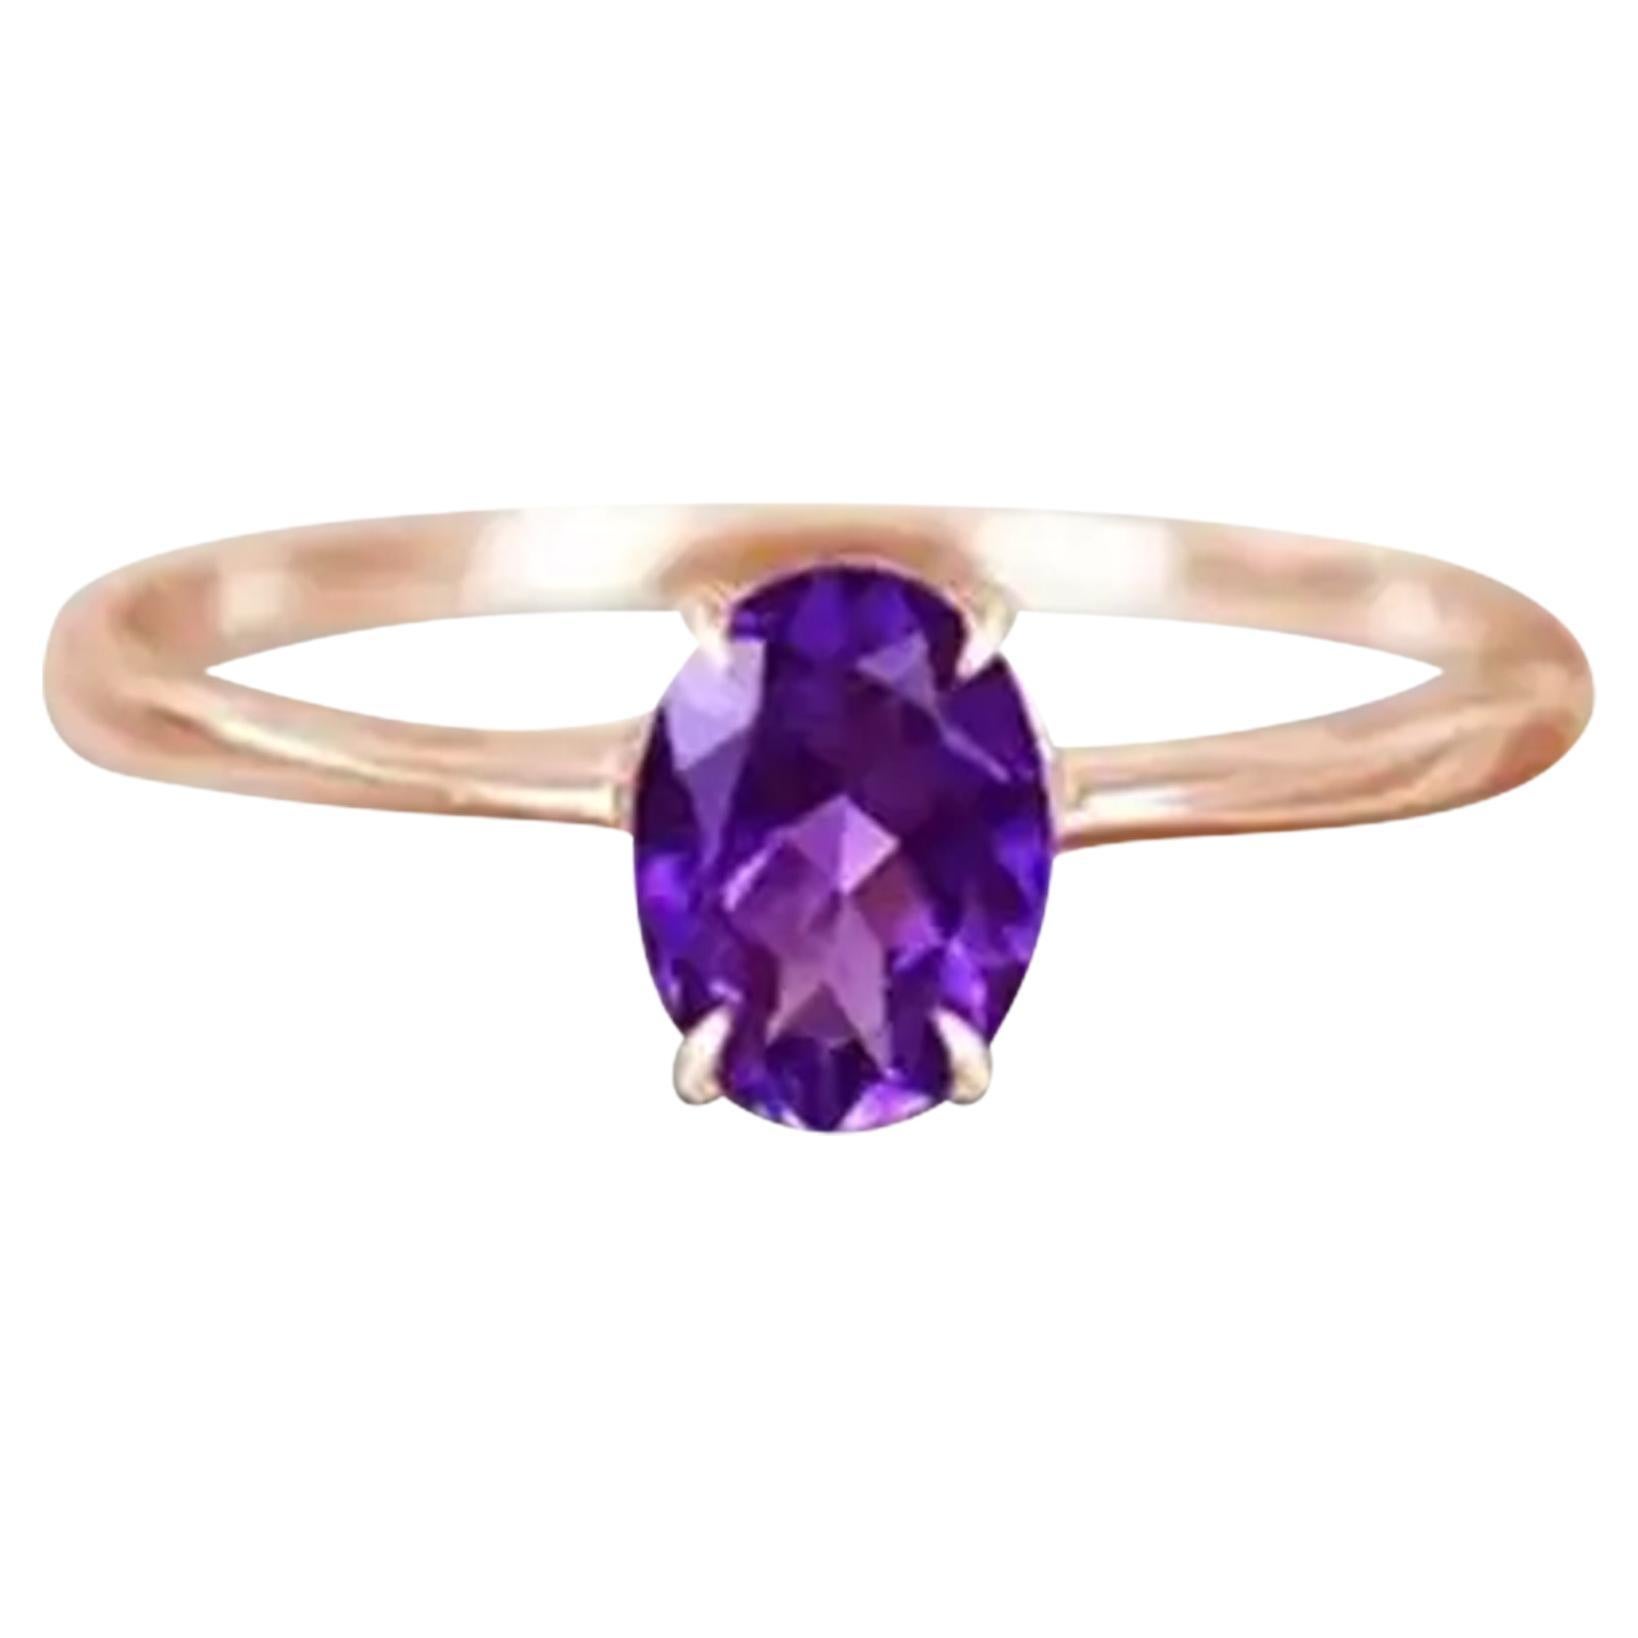 For Sale:  14k Gold Oval Gemstone 7x5 mm Oval Gemstone Ring Gemstone Engagement Ring